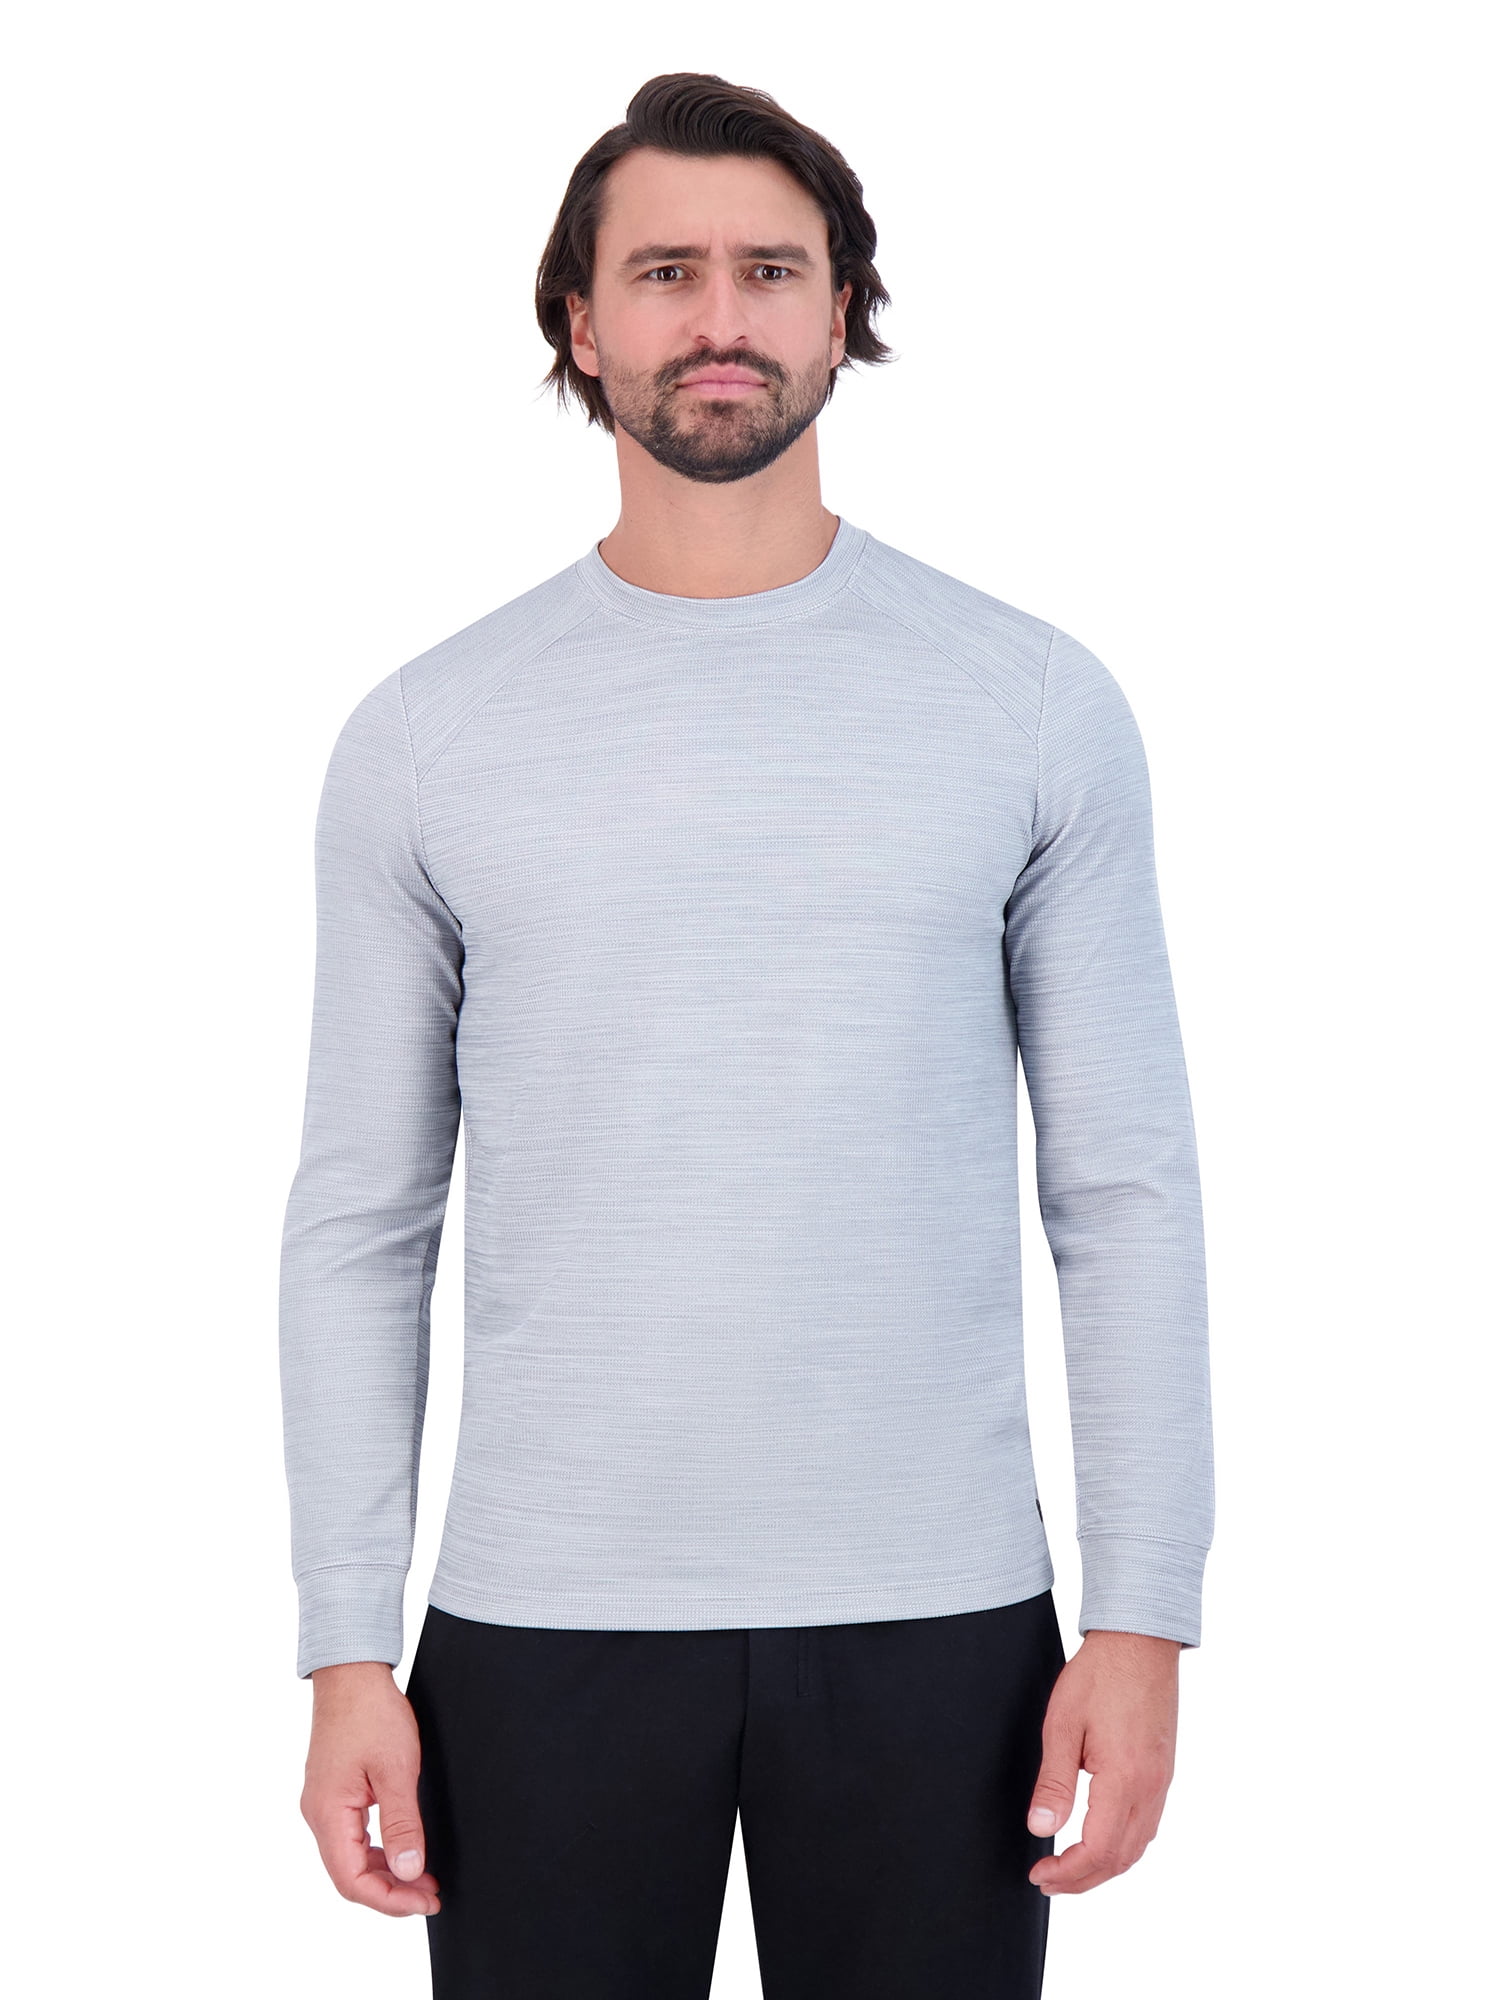 Gaiam Men's Cozy & Cool Long Sleeve Crew Sweatshirt, Sizes S-XL